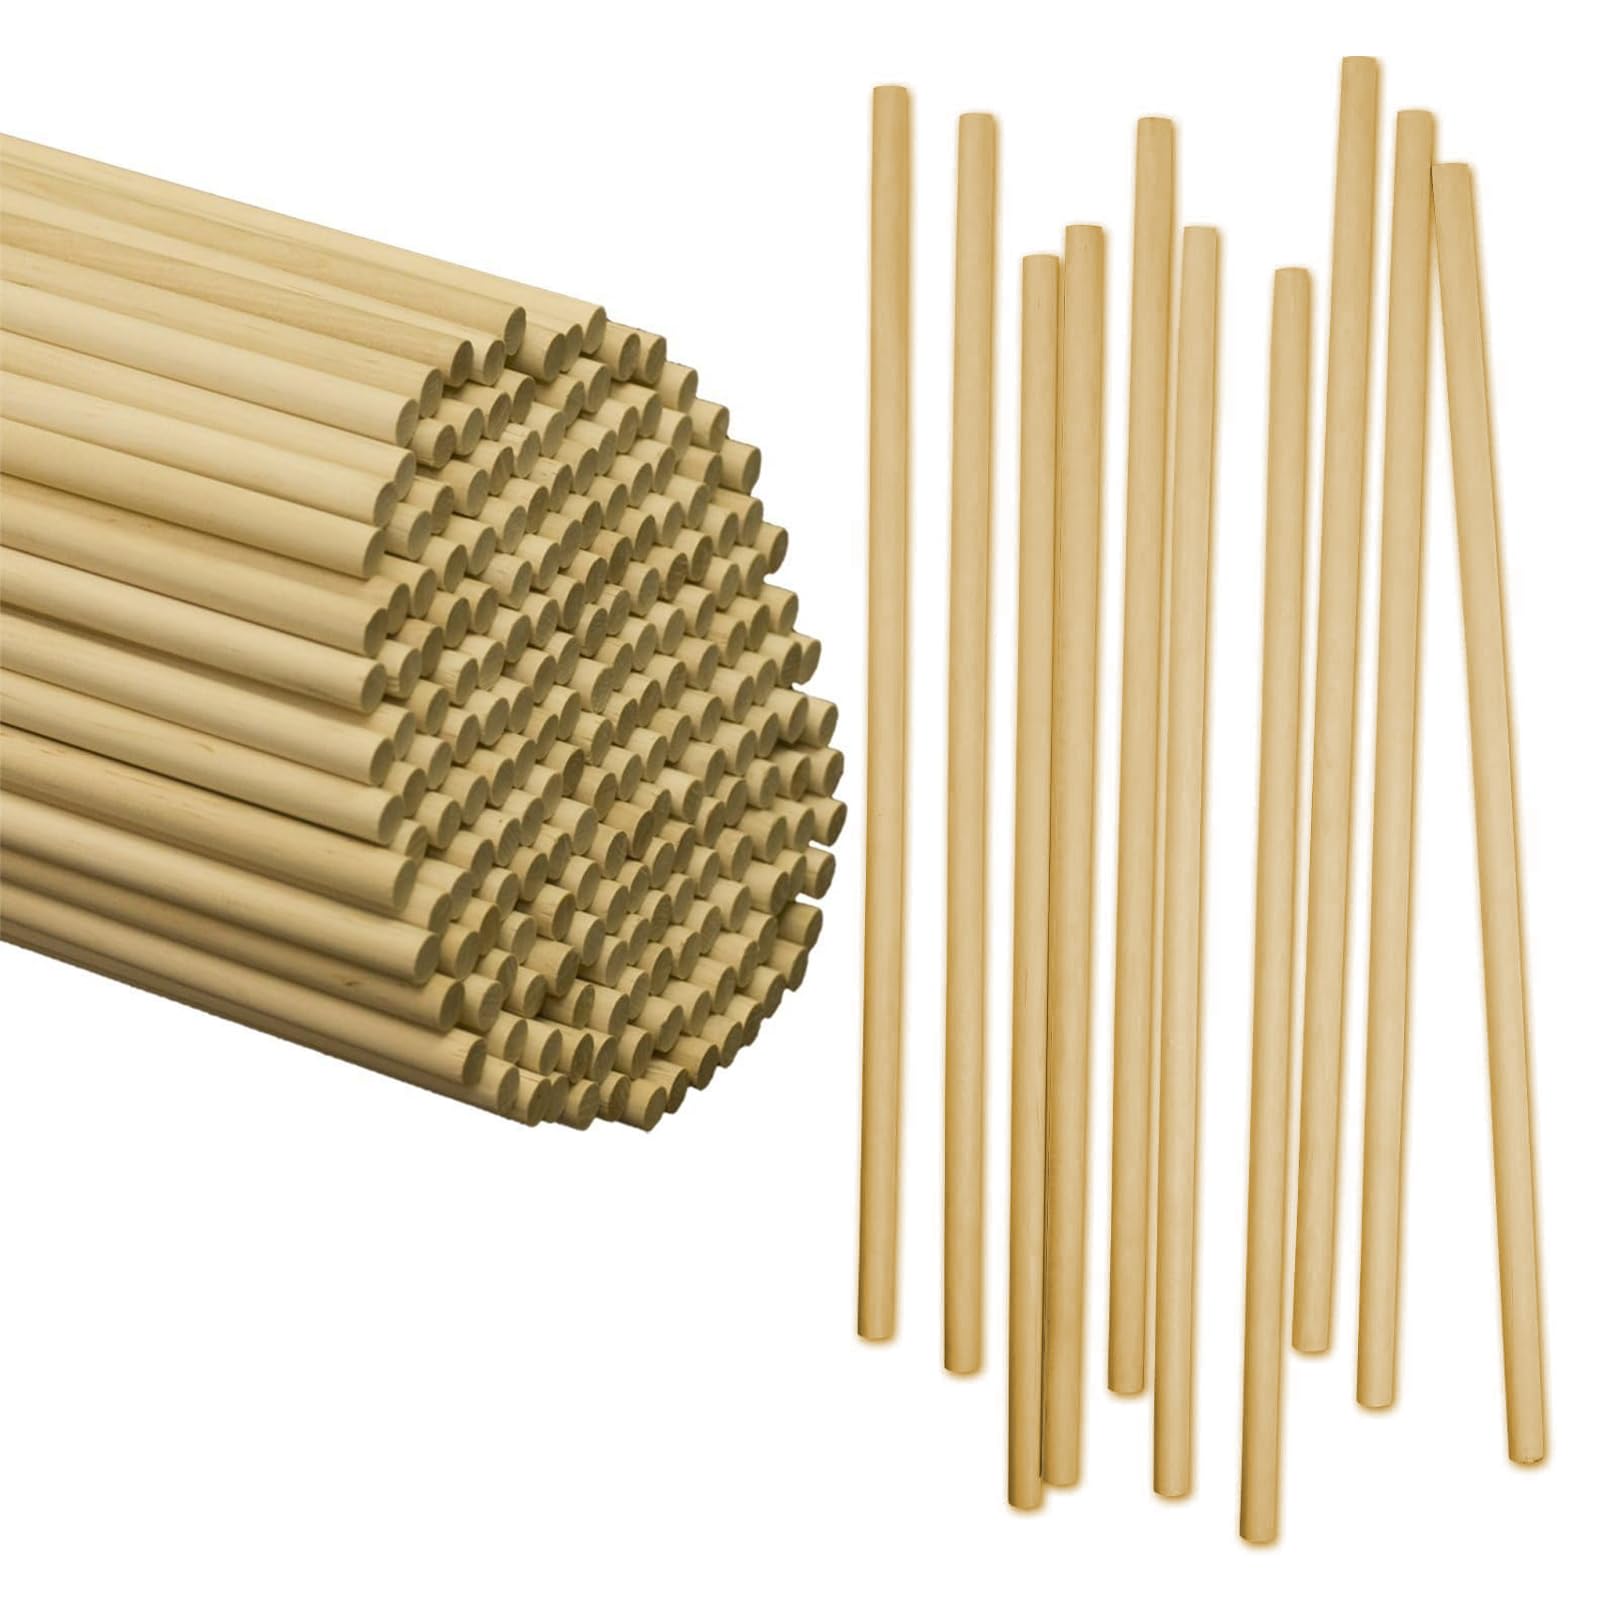 50PCS Dowel Rods Wood Sticks Wooden Dowel Rods - 1/4 x 12 Inch